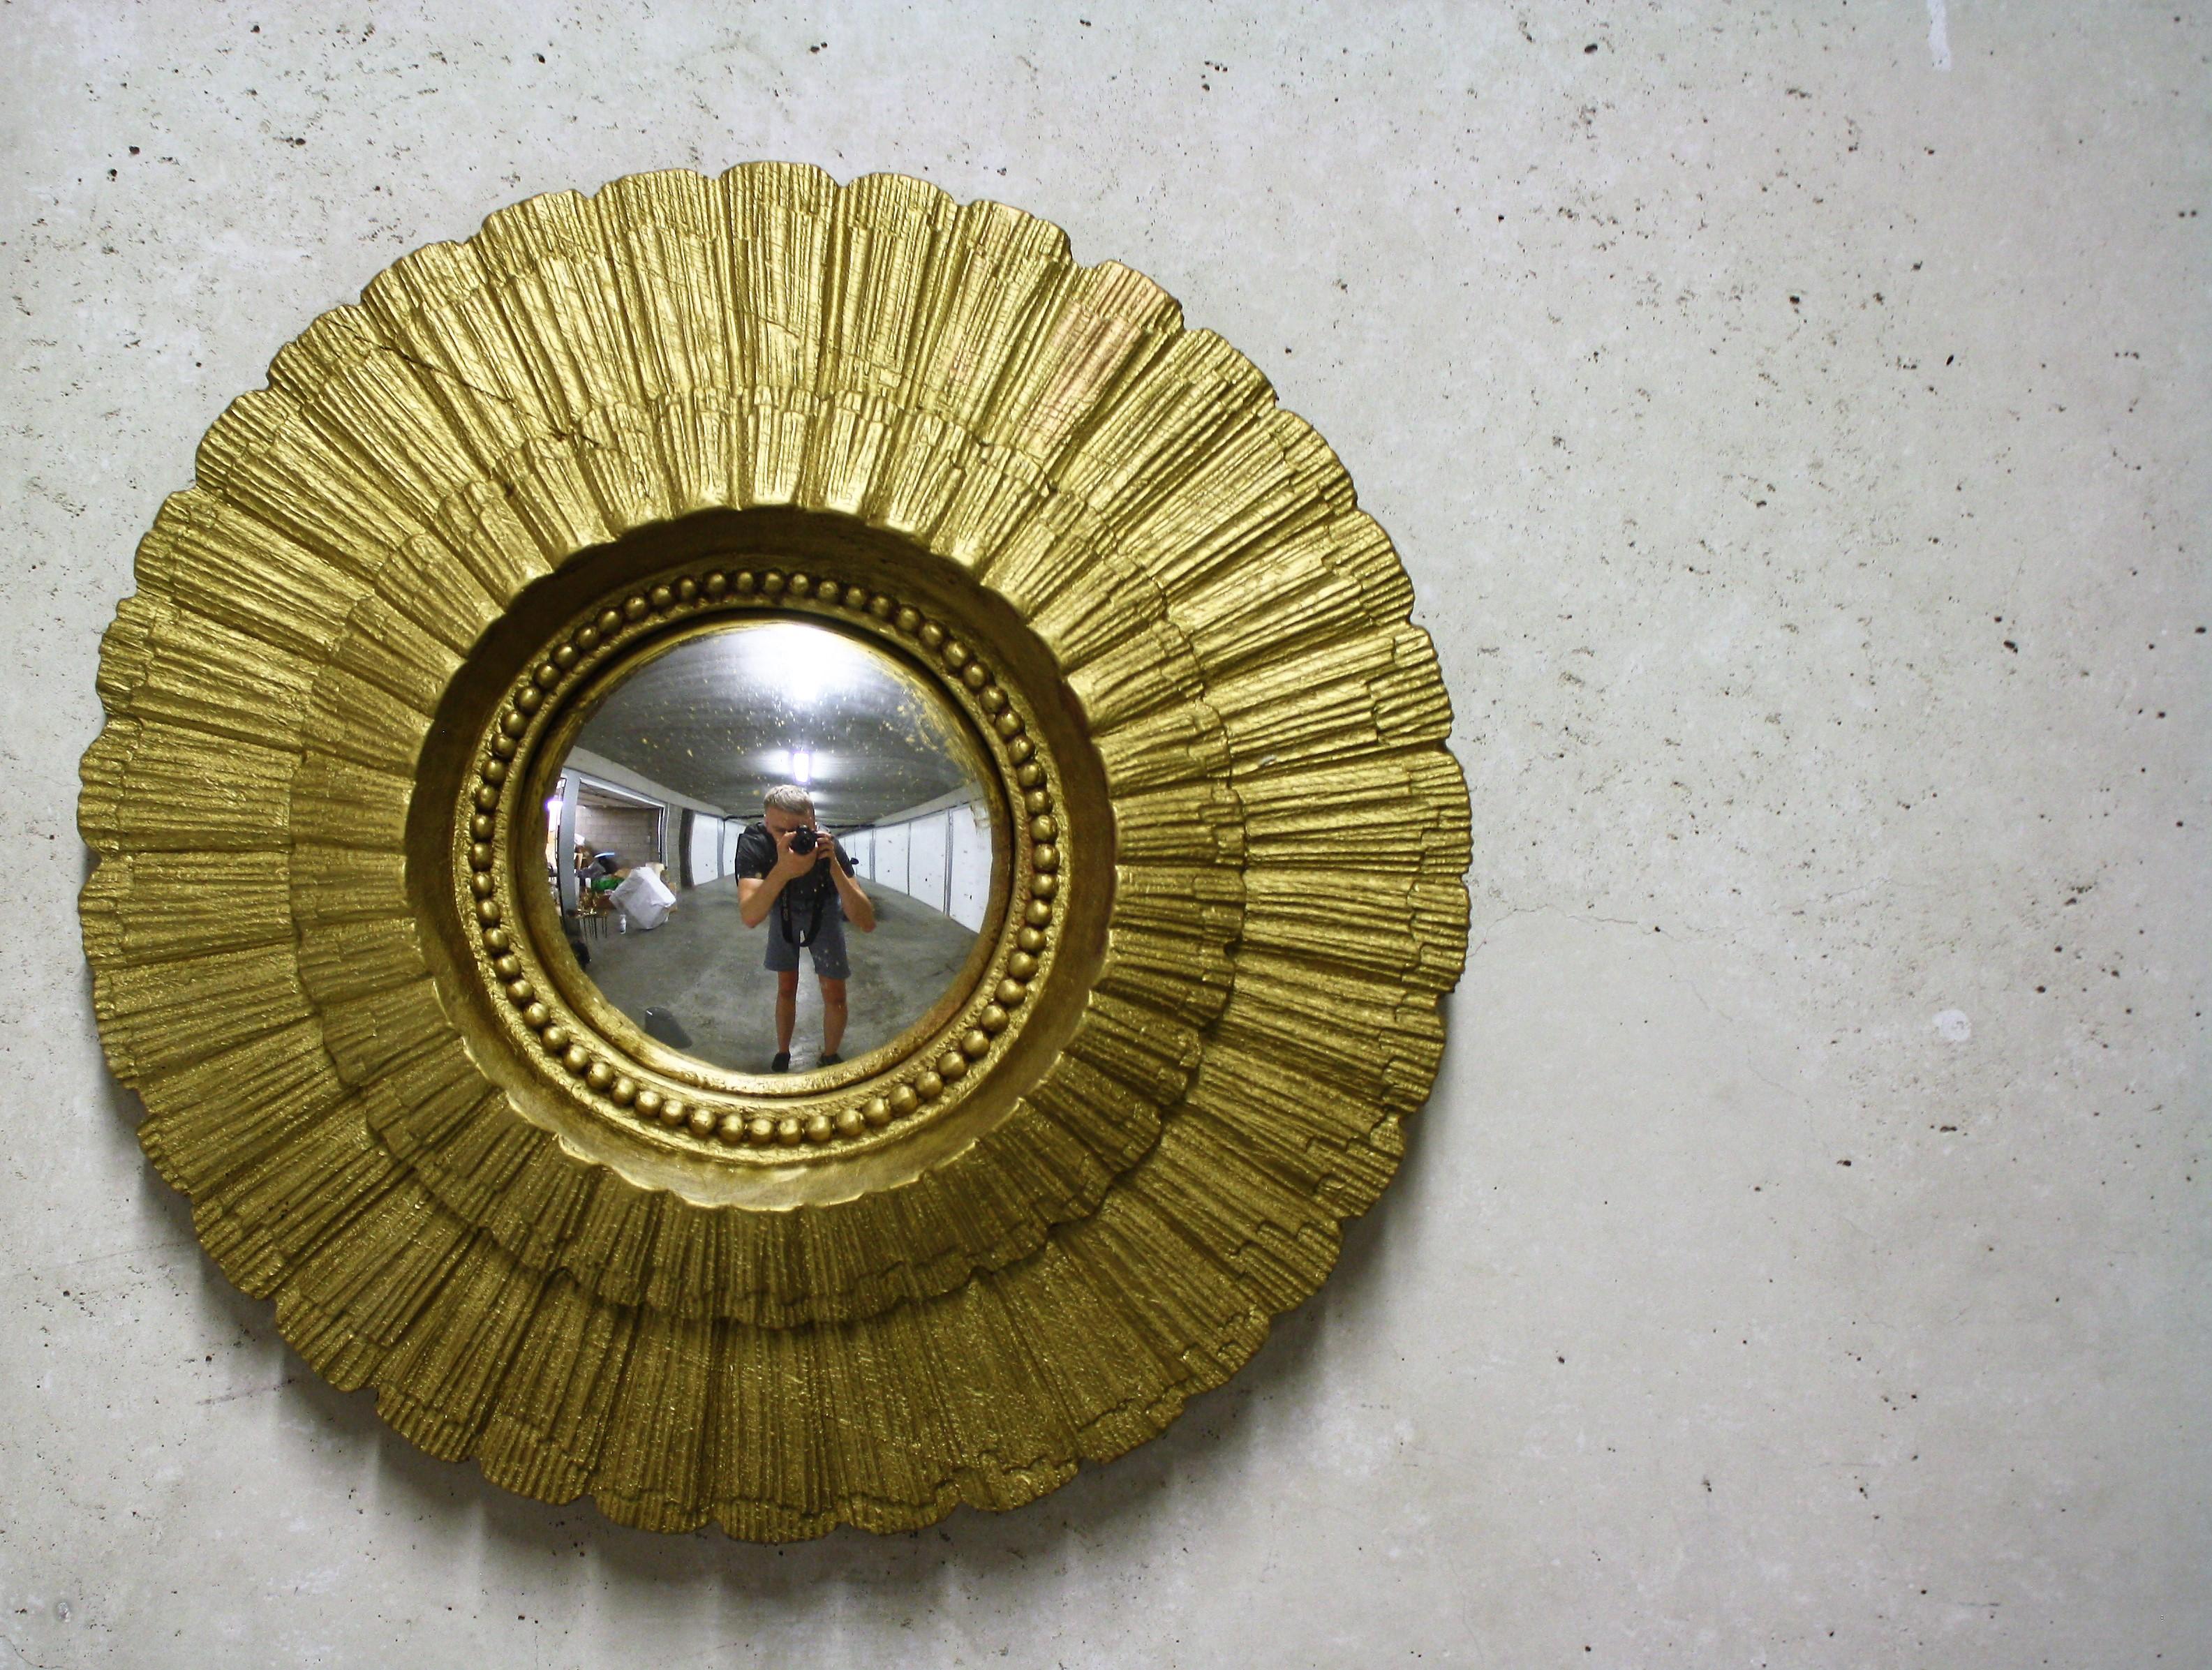 Vintage Golden Sunburst Mirror, 1960s In Good Condition In HEVERLEE, BE